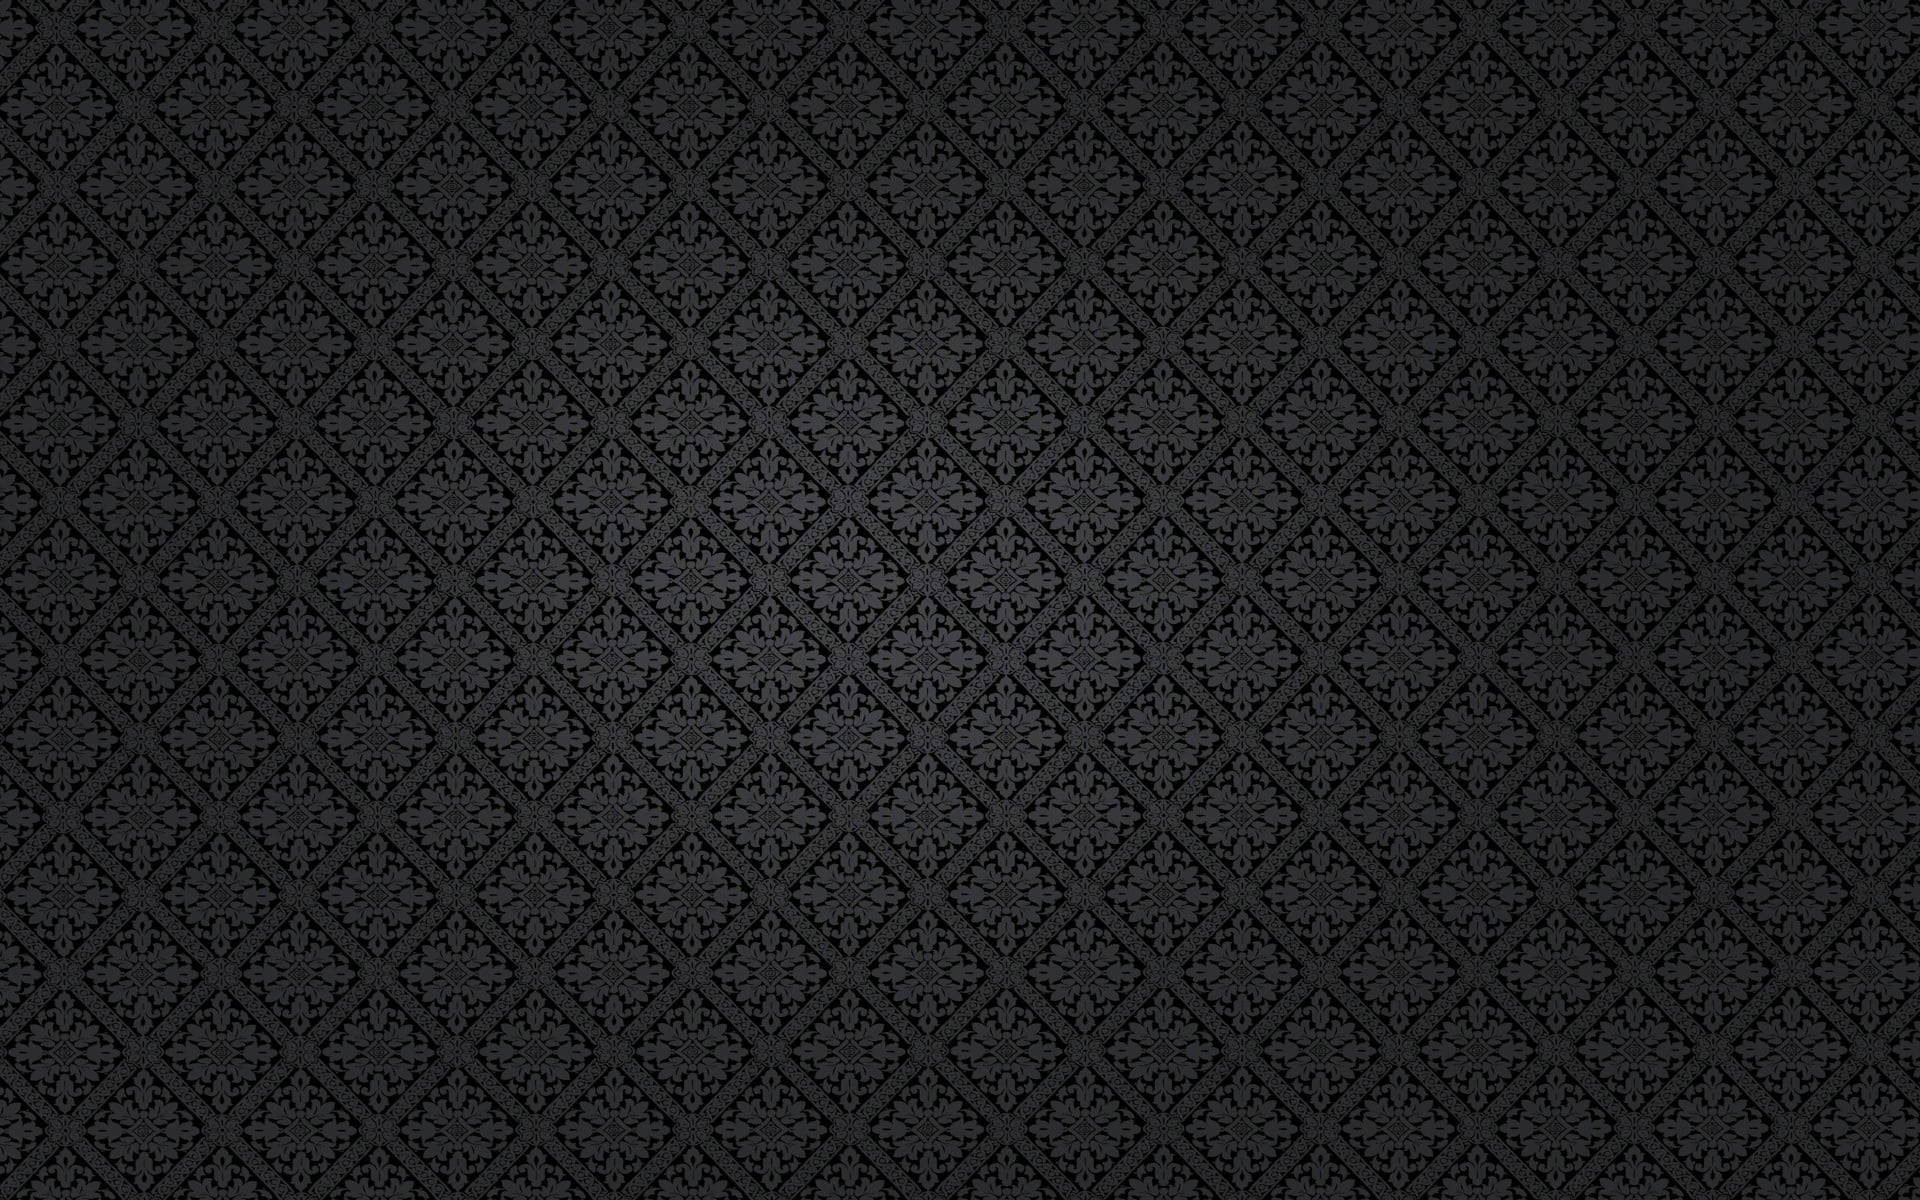 Classic Black Floral Diamond Pattern Background